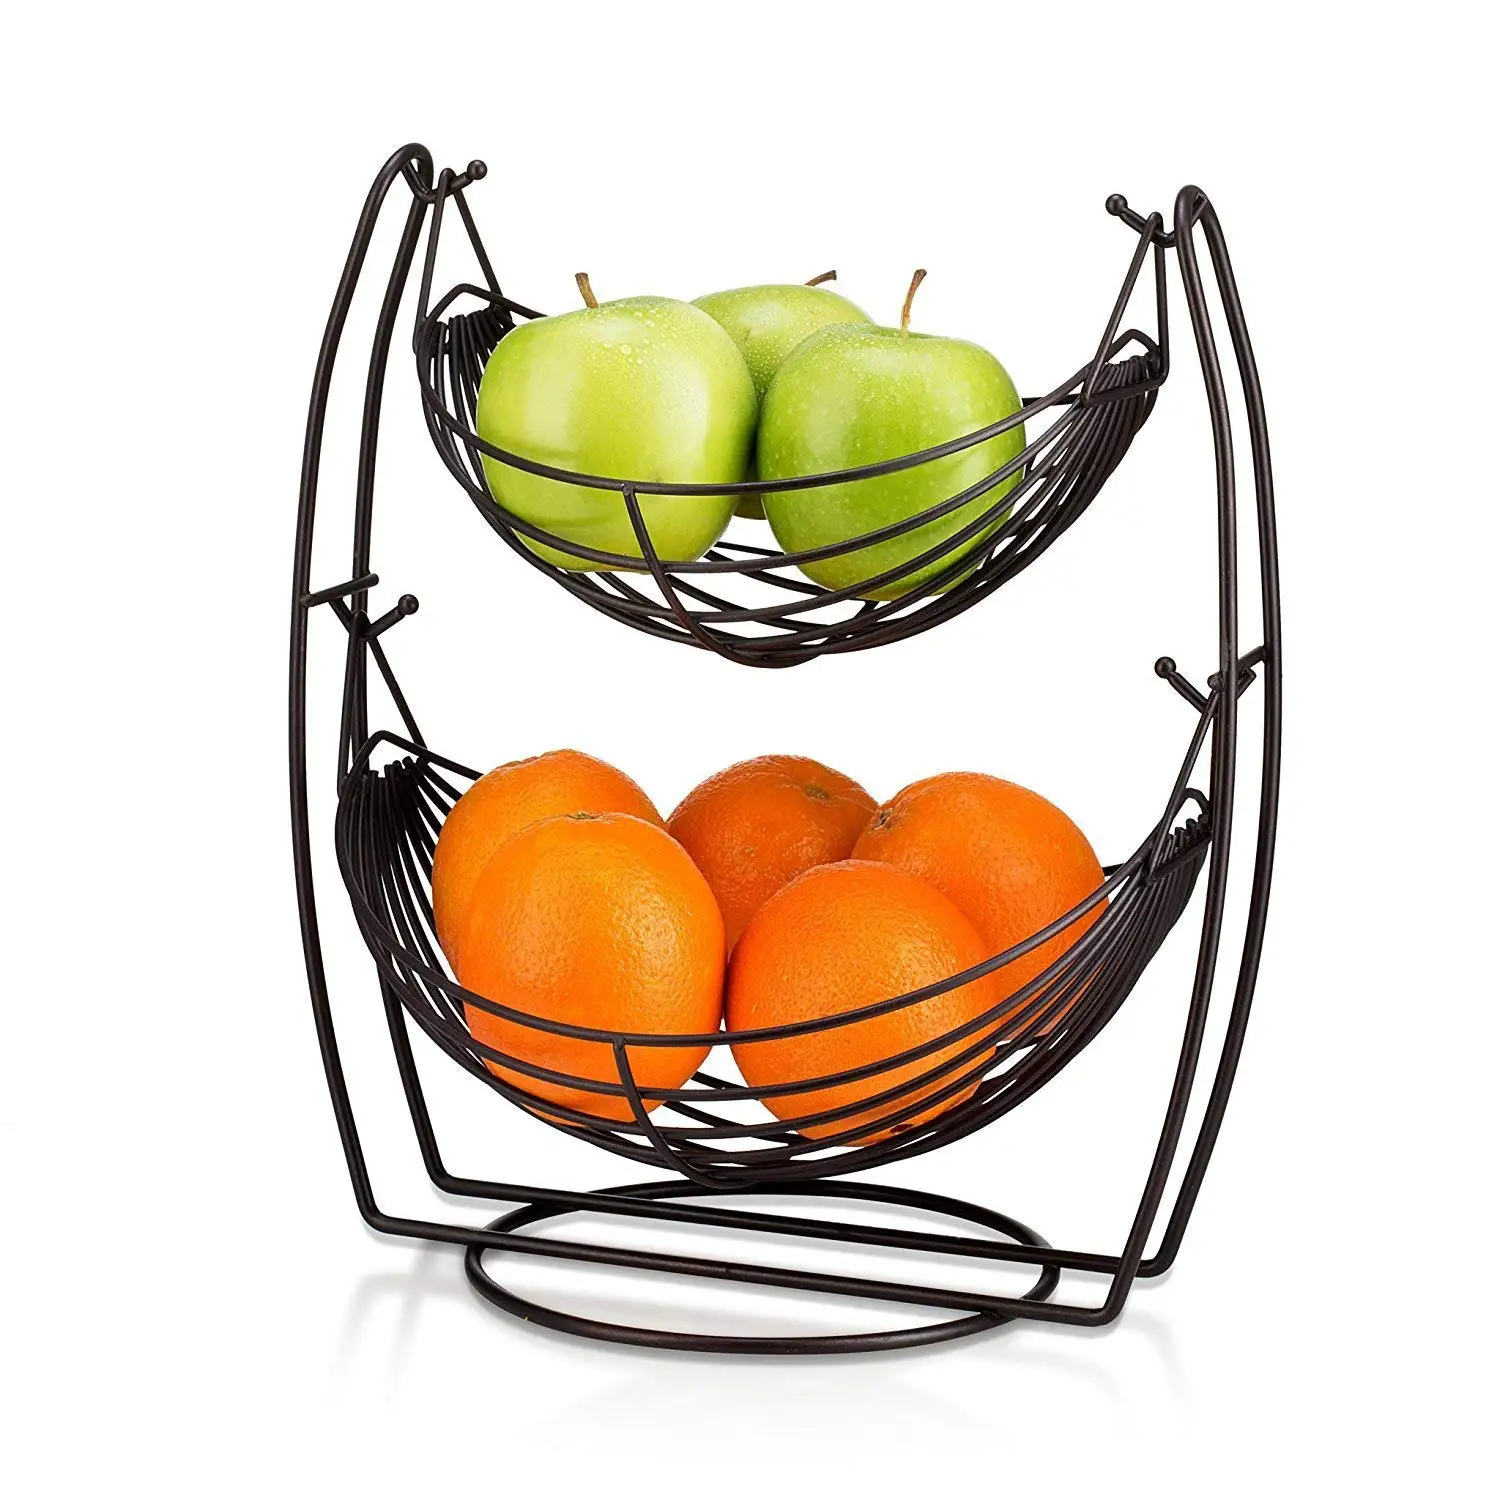 Buy 2 Tier Fruit Basket Double Hammock Kitchen Produce Storage